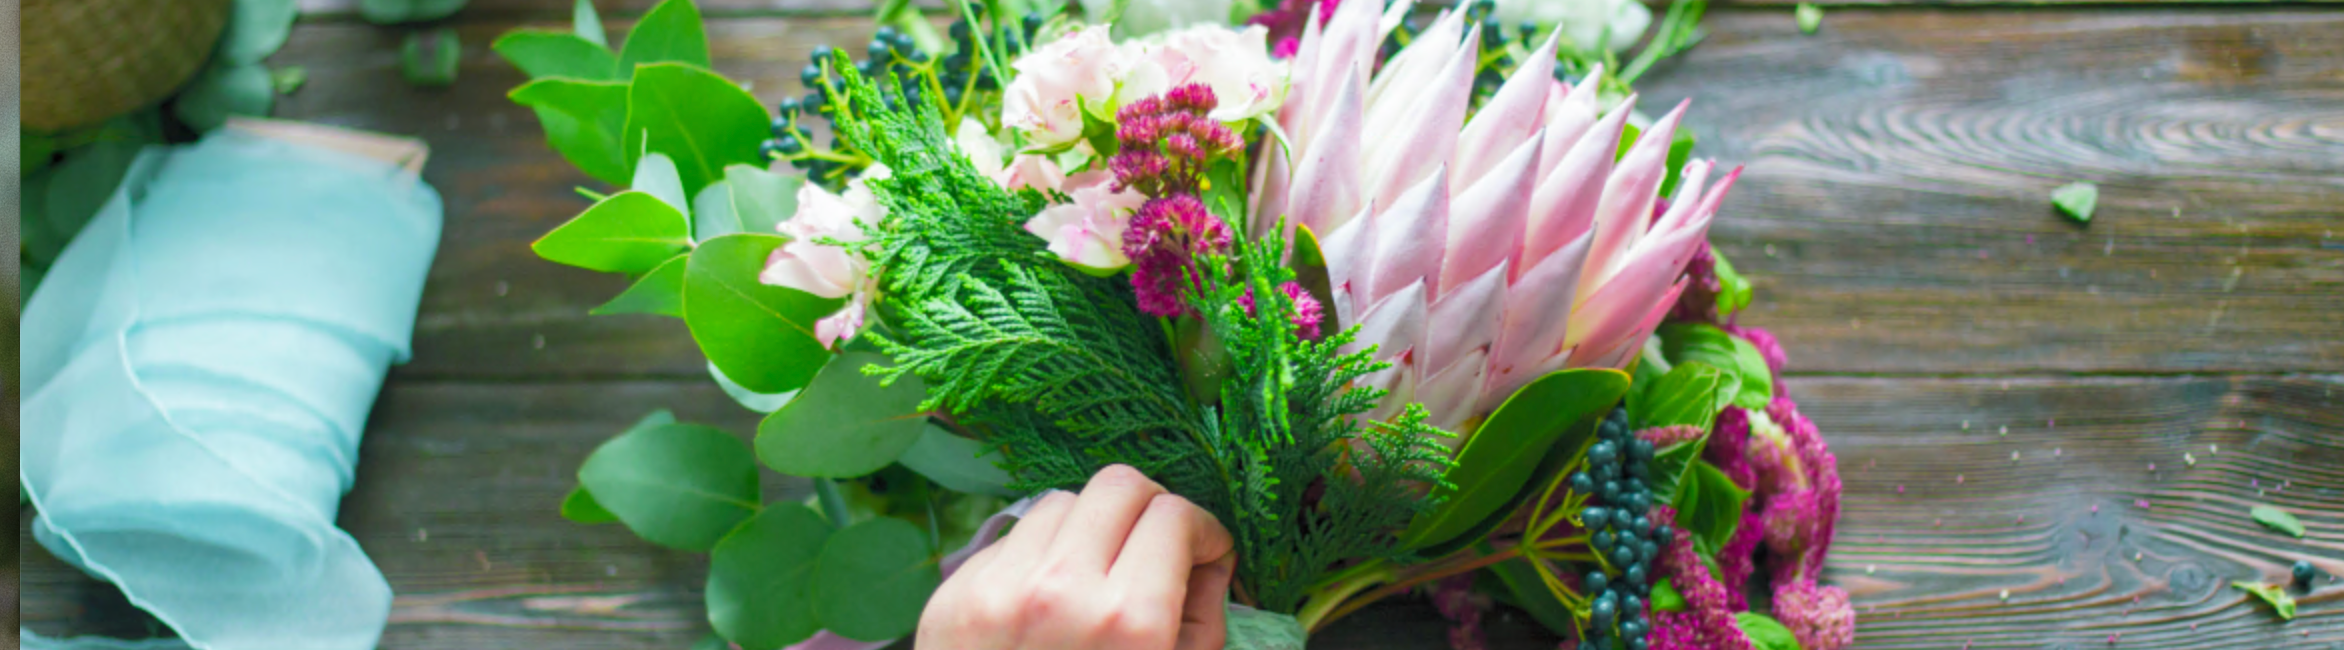 Bloemen bestellen in Doetinchem - Delade Floral Design